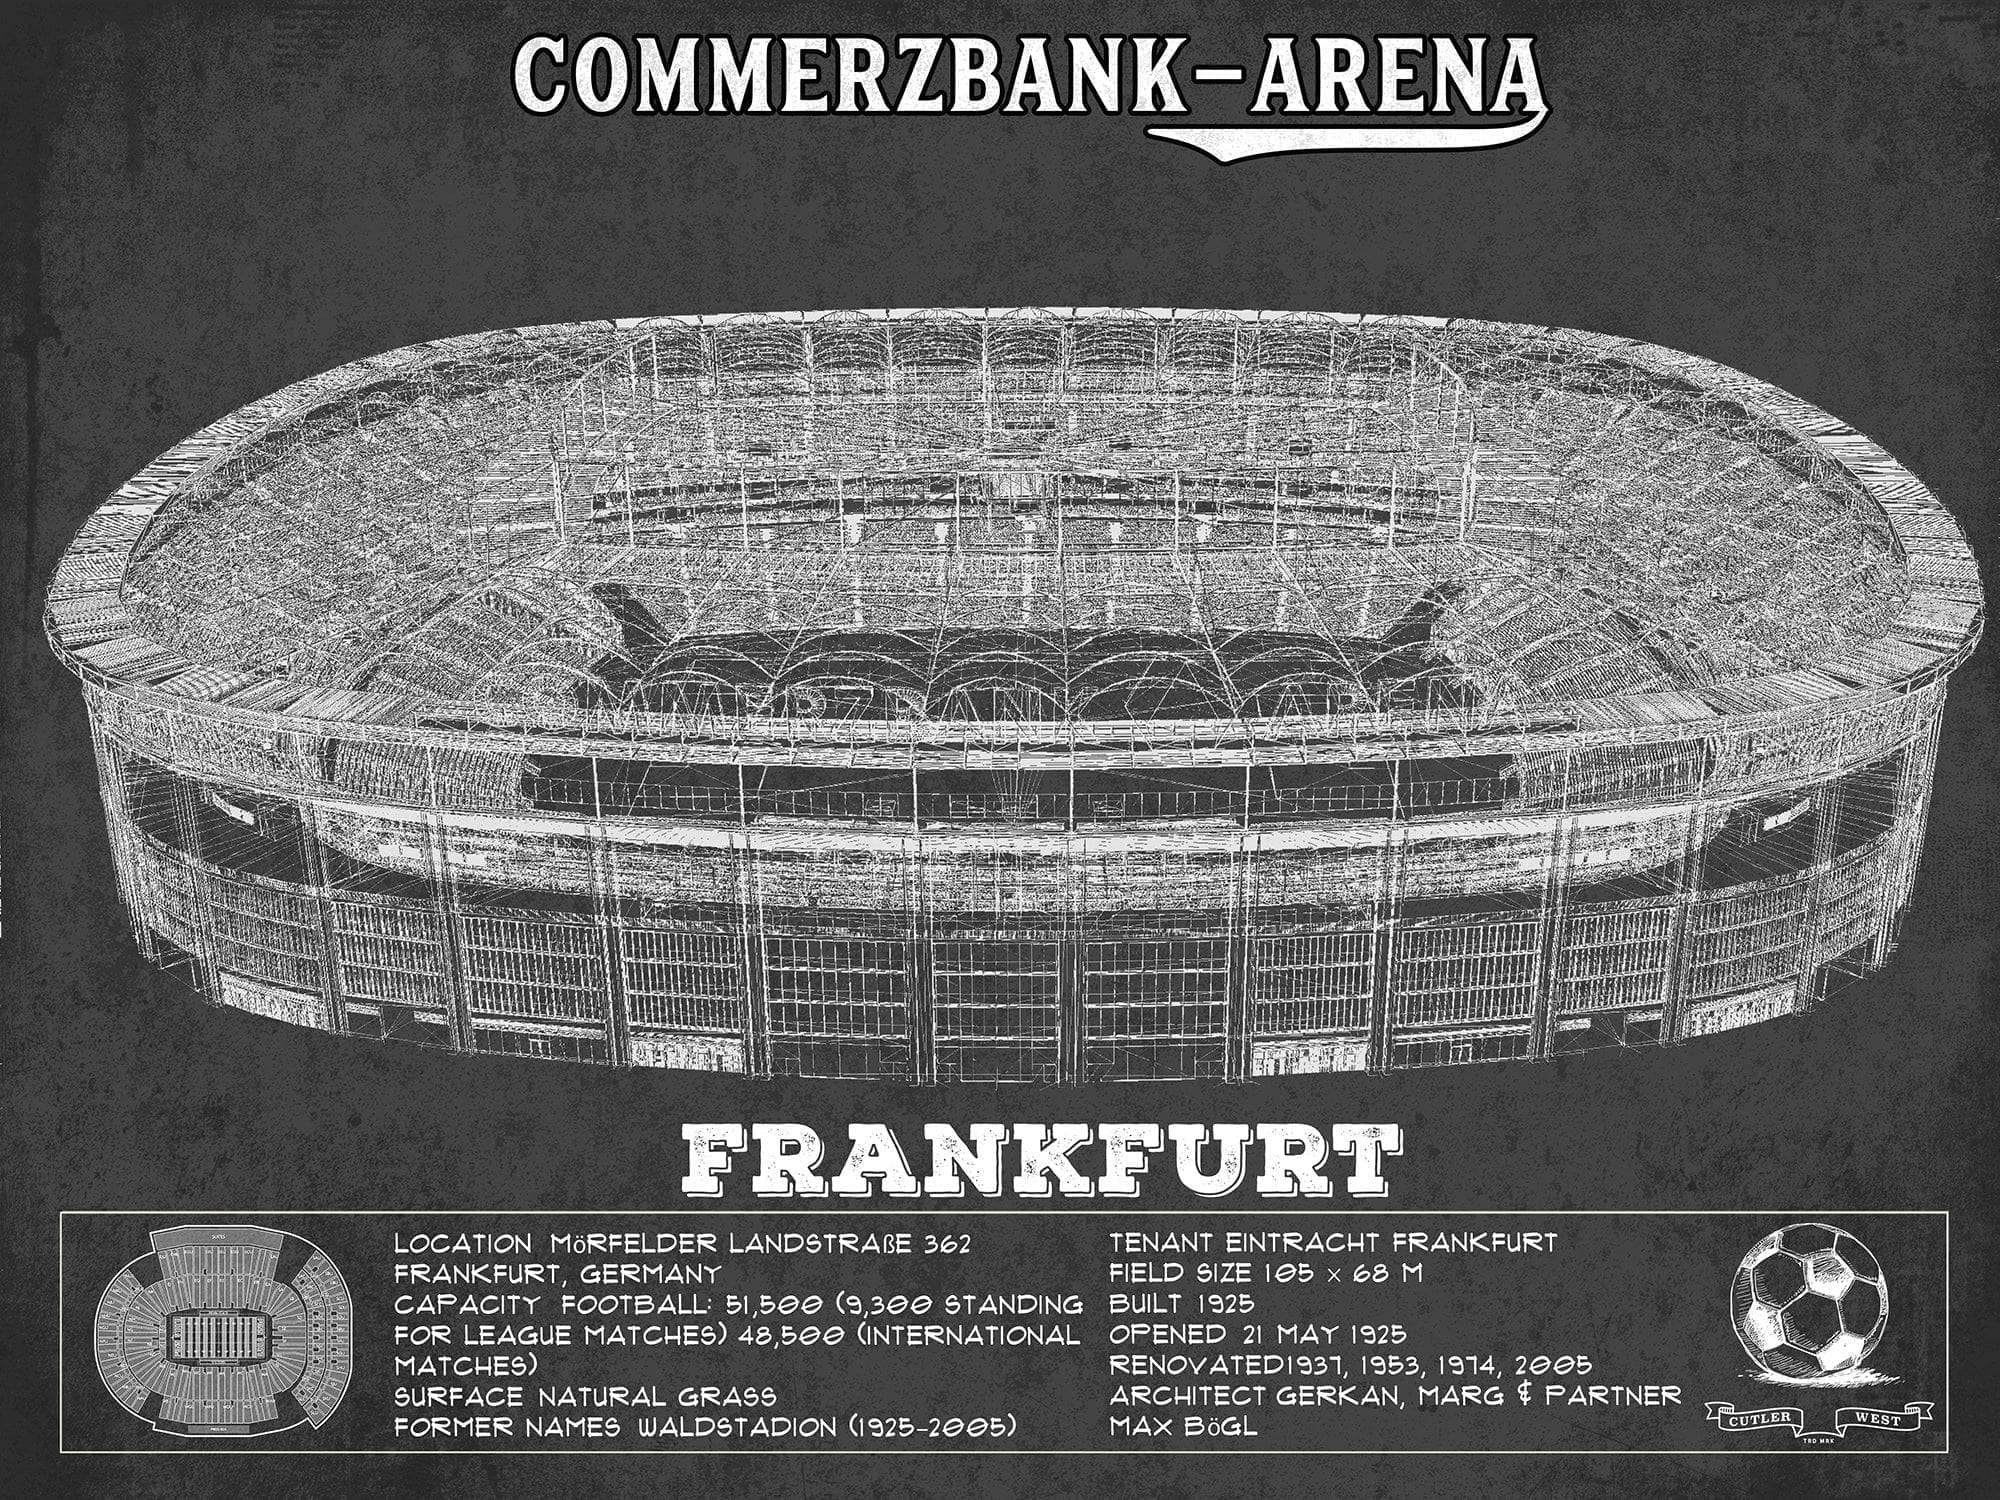 Cutler West Soccer Collection 14" x 11" / Unframed Eintracht Frankfurt FC - Commerzbank-Arena Soccer Print 715266989_66771